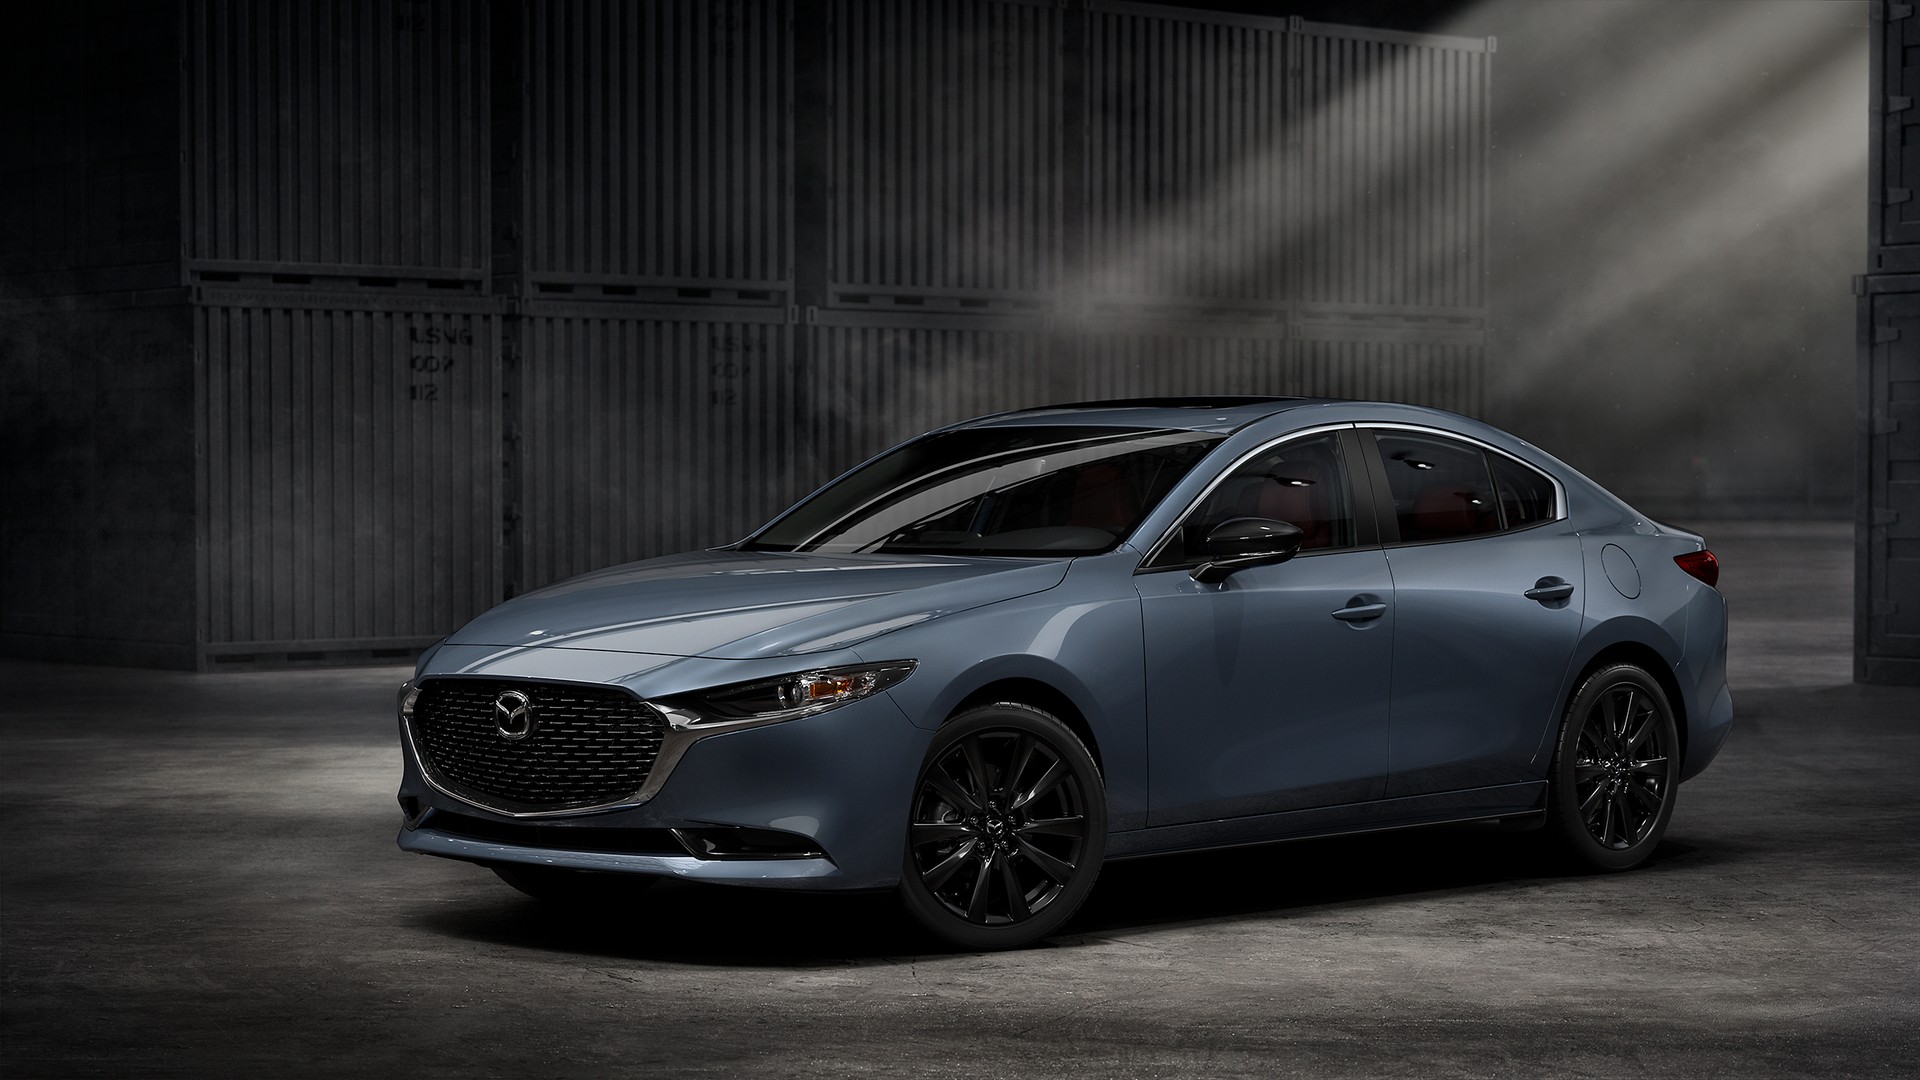 Mazda Raises 3 Mazda2022 Price, Launches Exclusive Carbon Edition Model